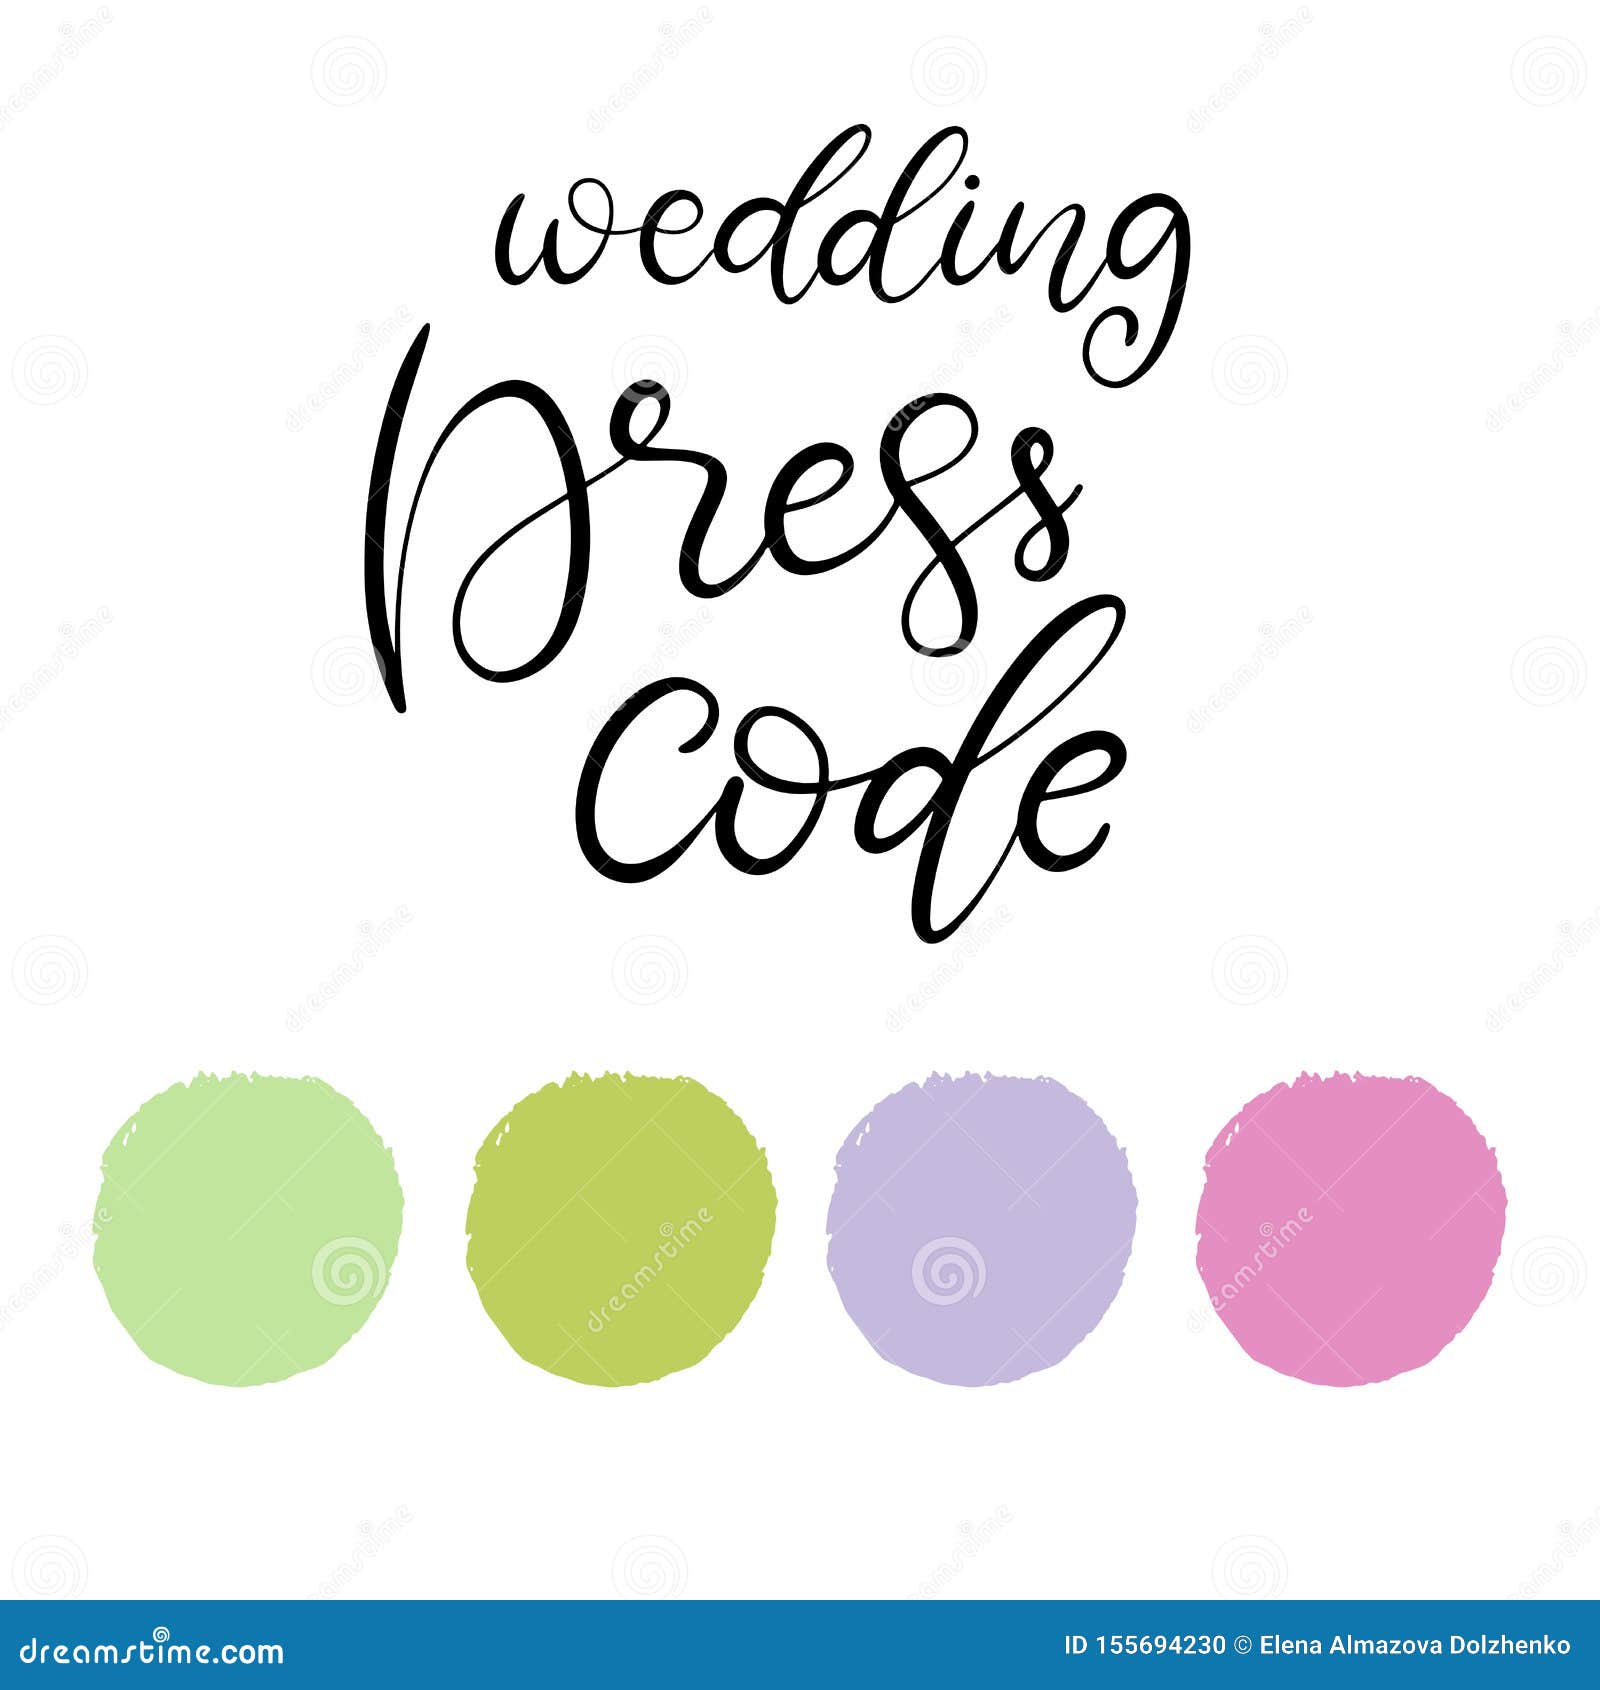 wedding dress code color